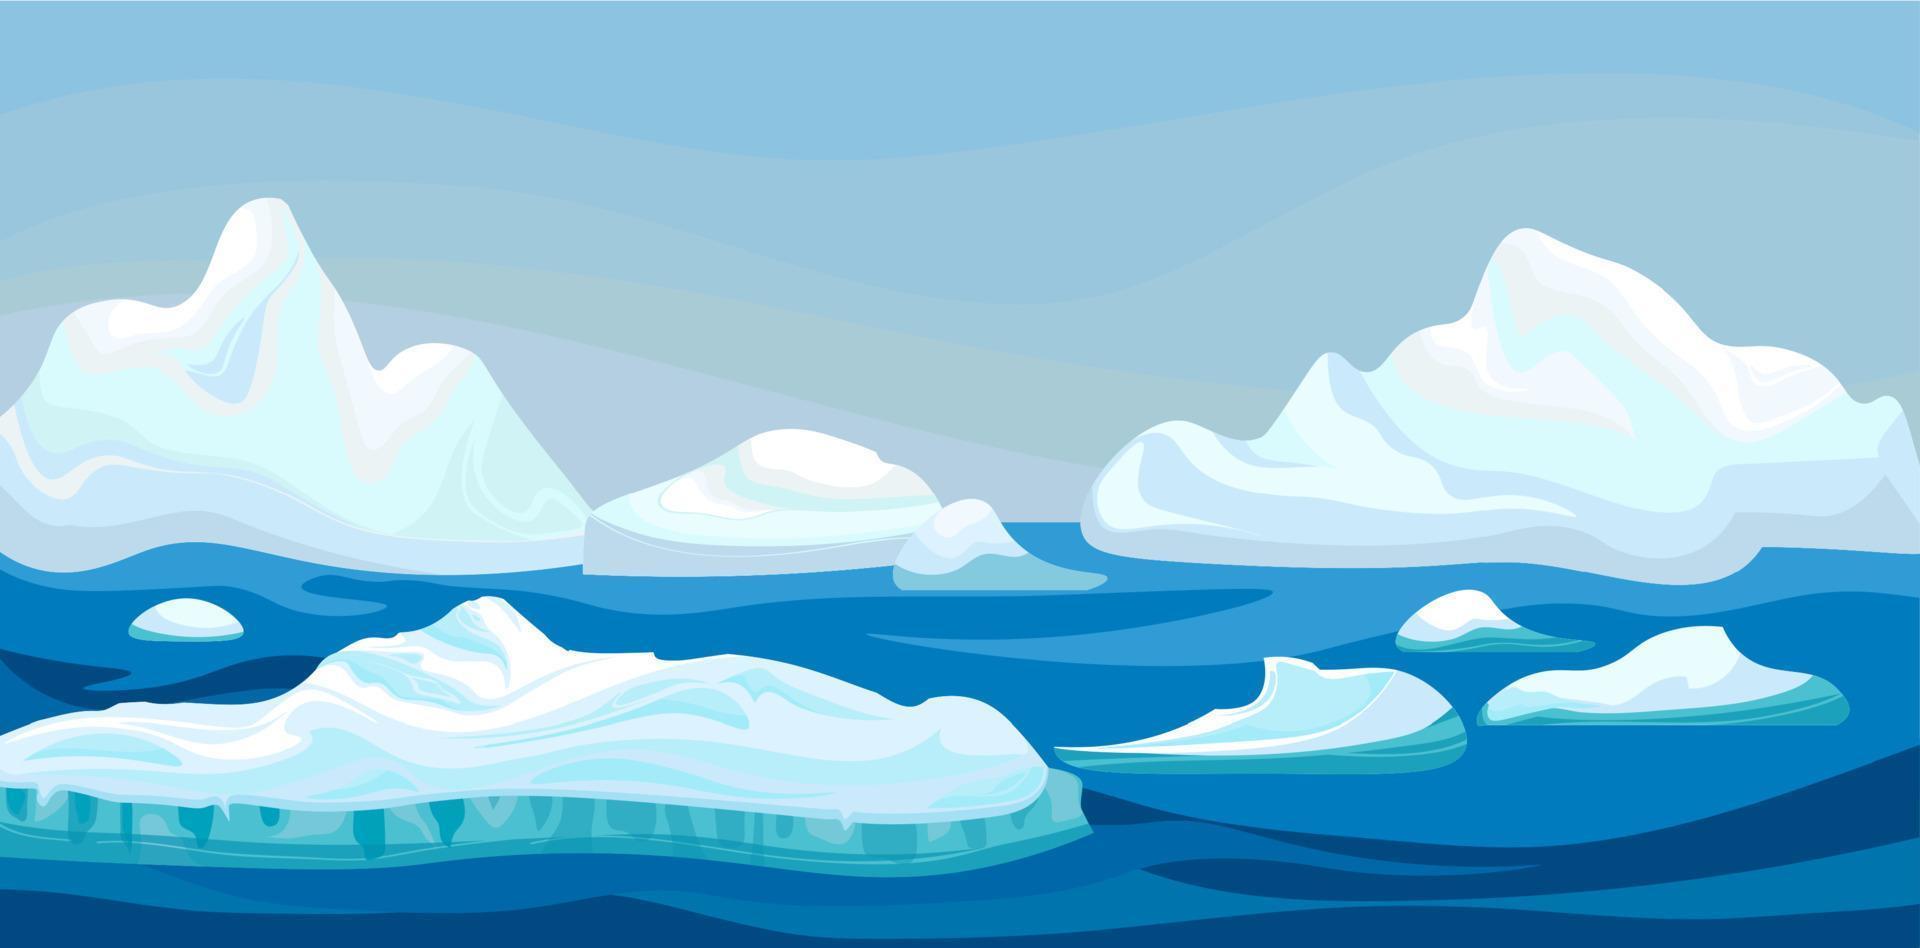 iceberg ártico de dibujos animados con mar azul, paisaje invernal. concepto de juego de escena océano ártico y montañas nevadas. ilustración de fondo de naturaleza vectorial. vector